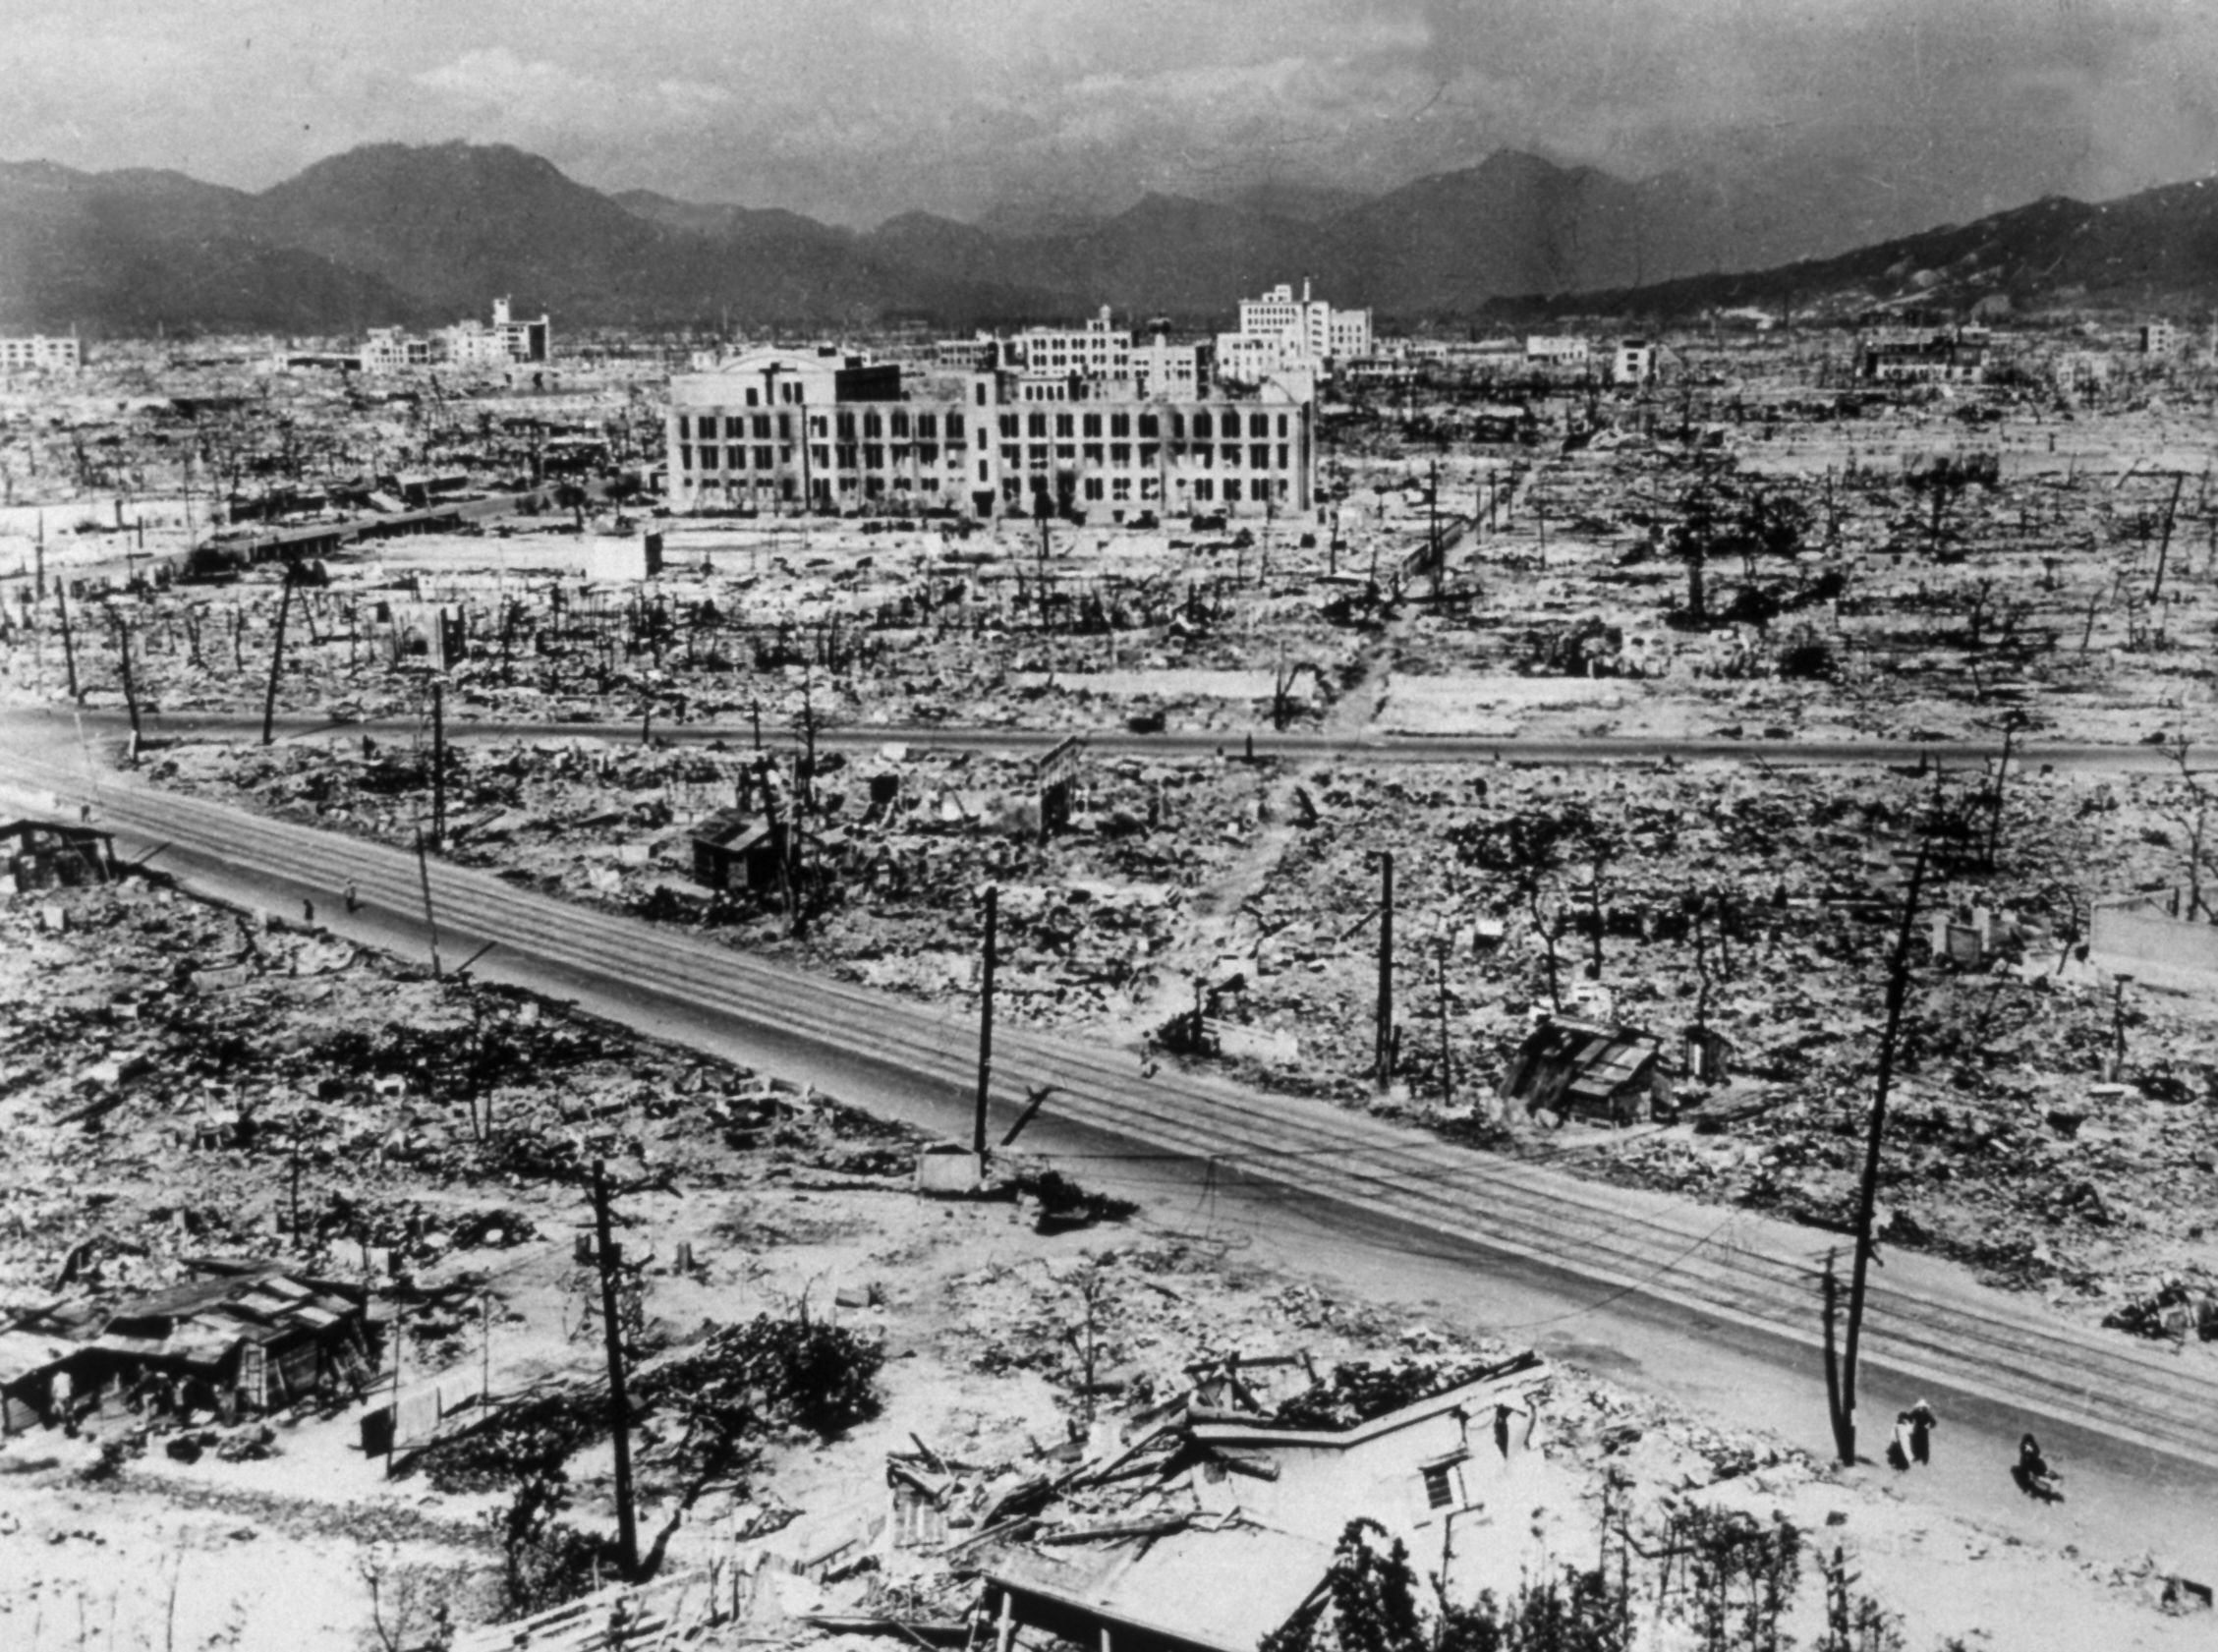 Impact Of The Atomic Bombs On Nagasaki